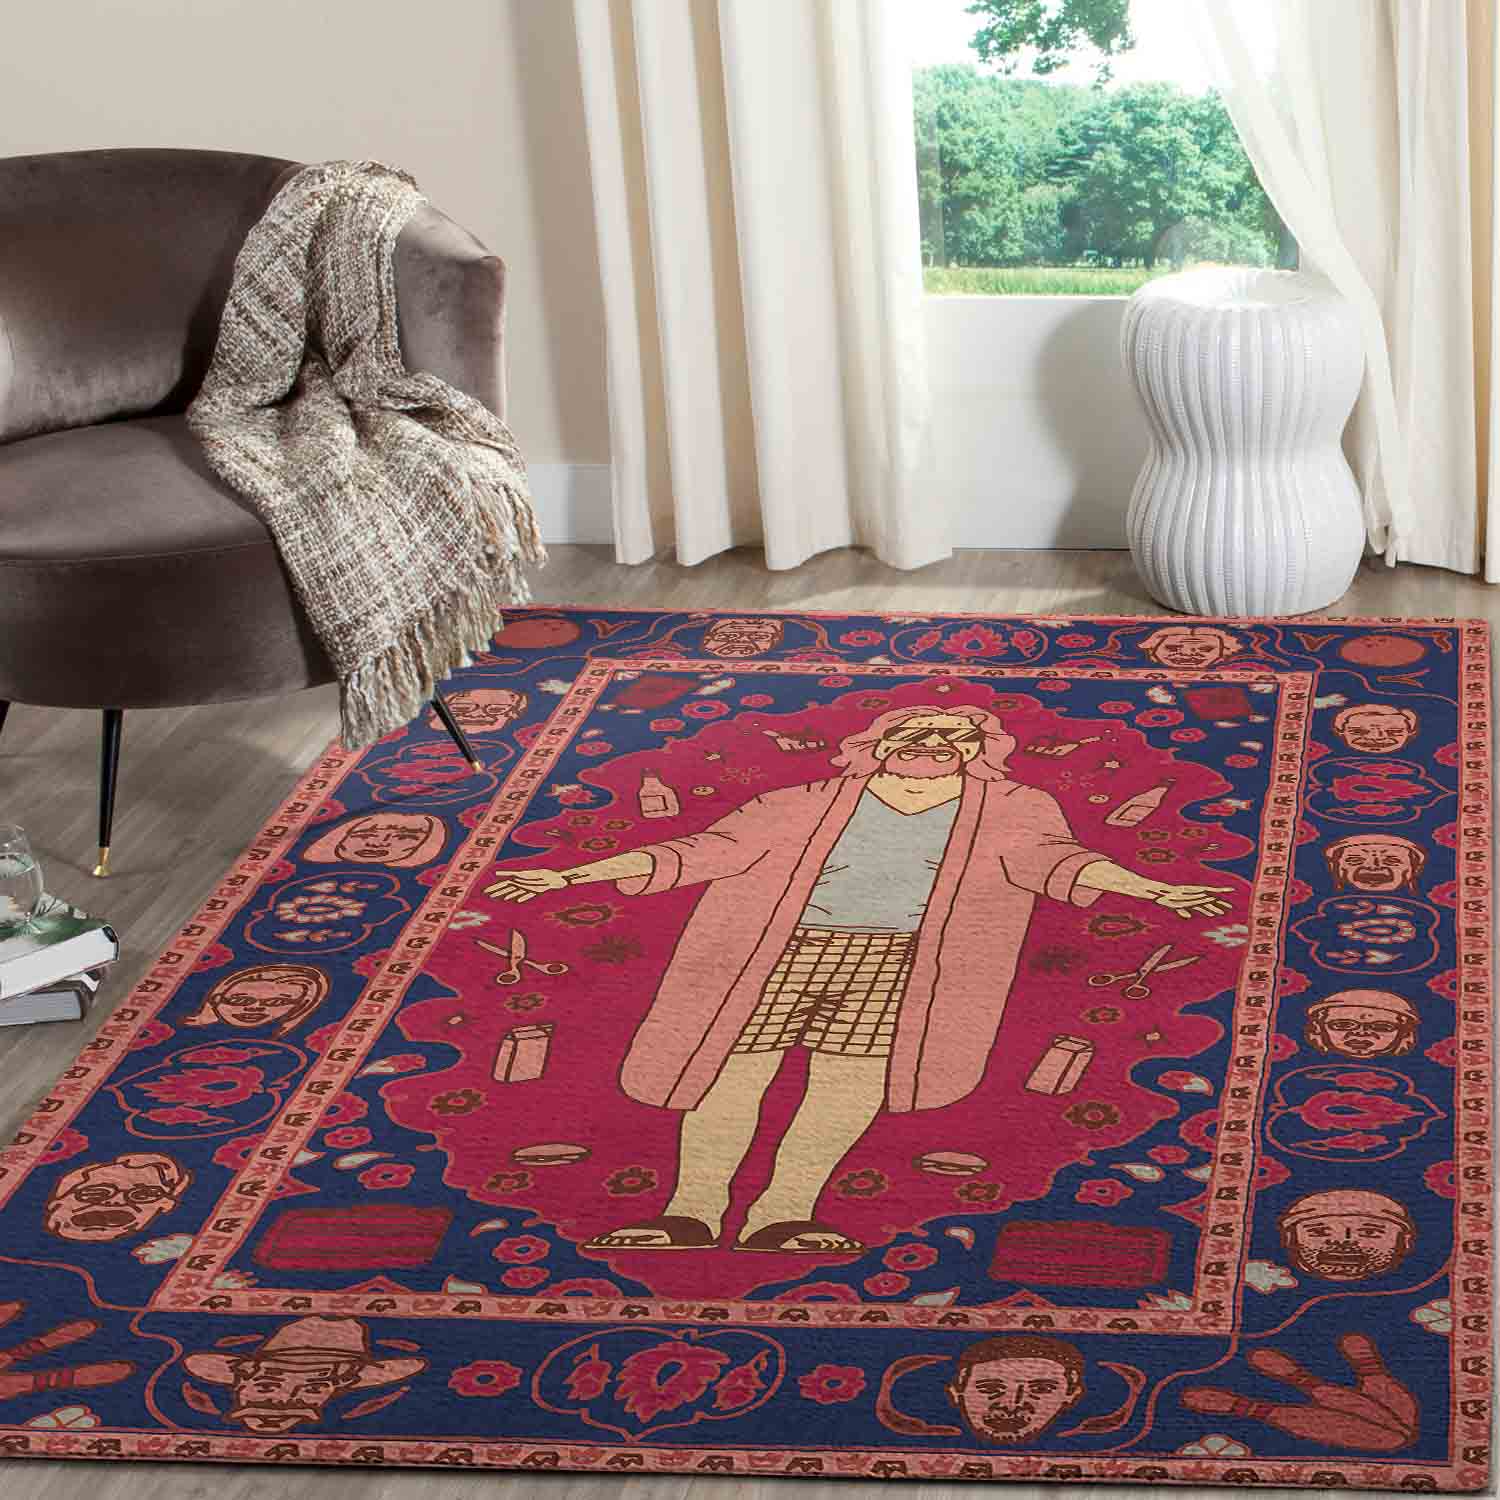 The Big Lebowski Carpet Dude Living Room Bedroom Teppich Wohnzimmer Dekor